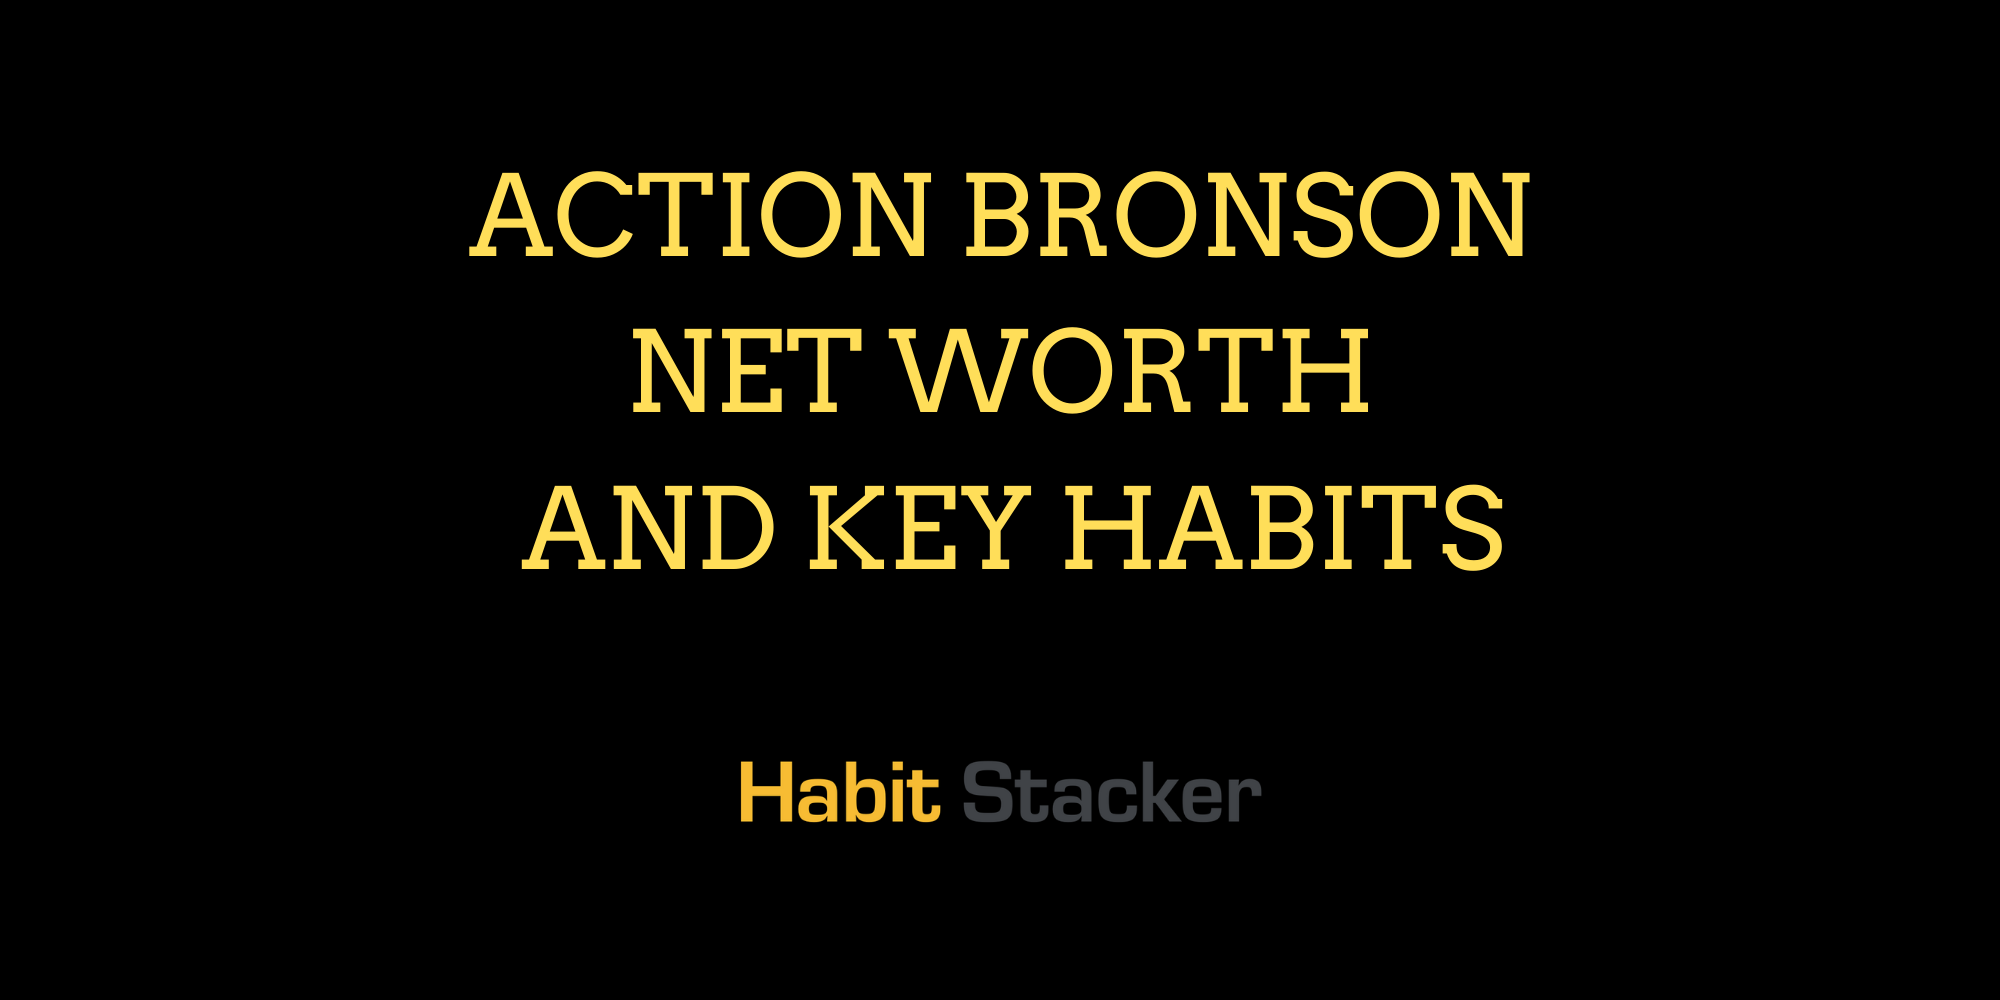 Action Bronson Net Worth and Key Habits